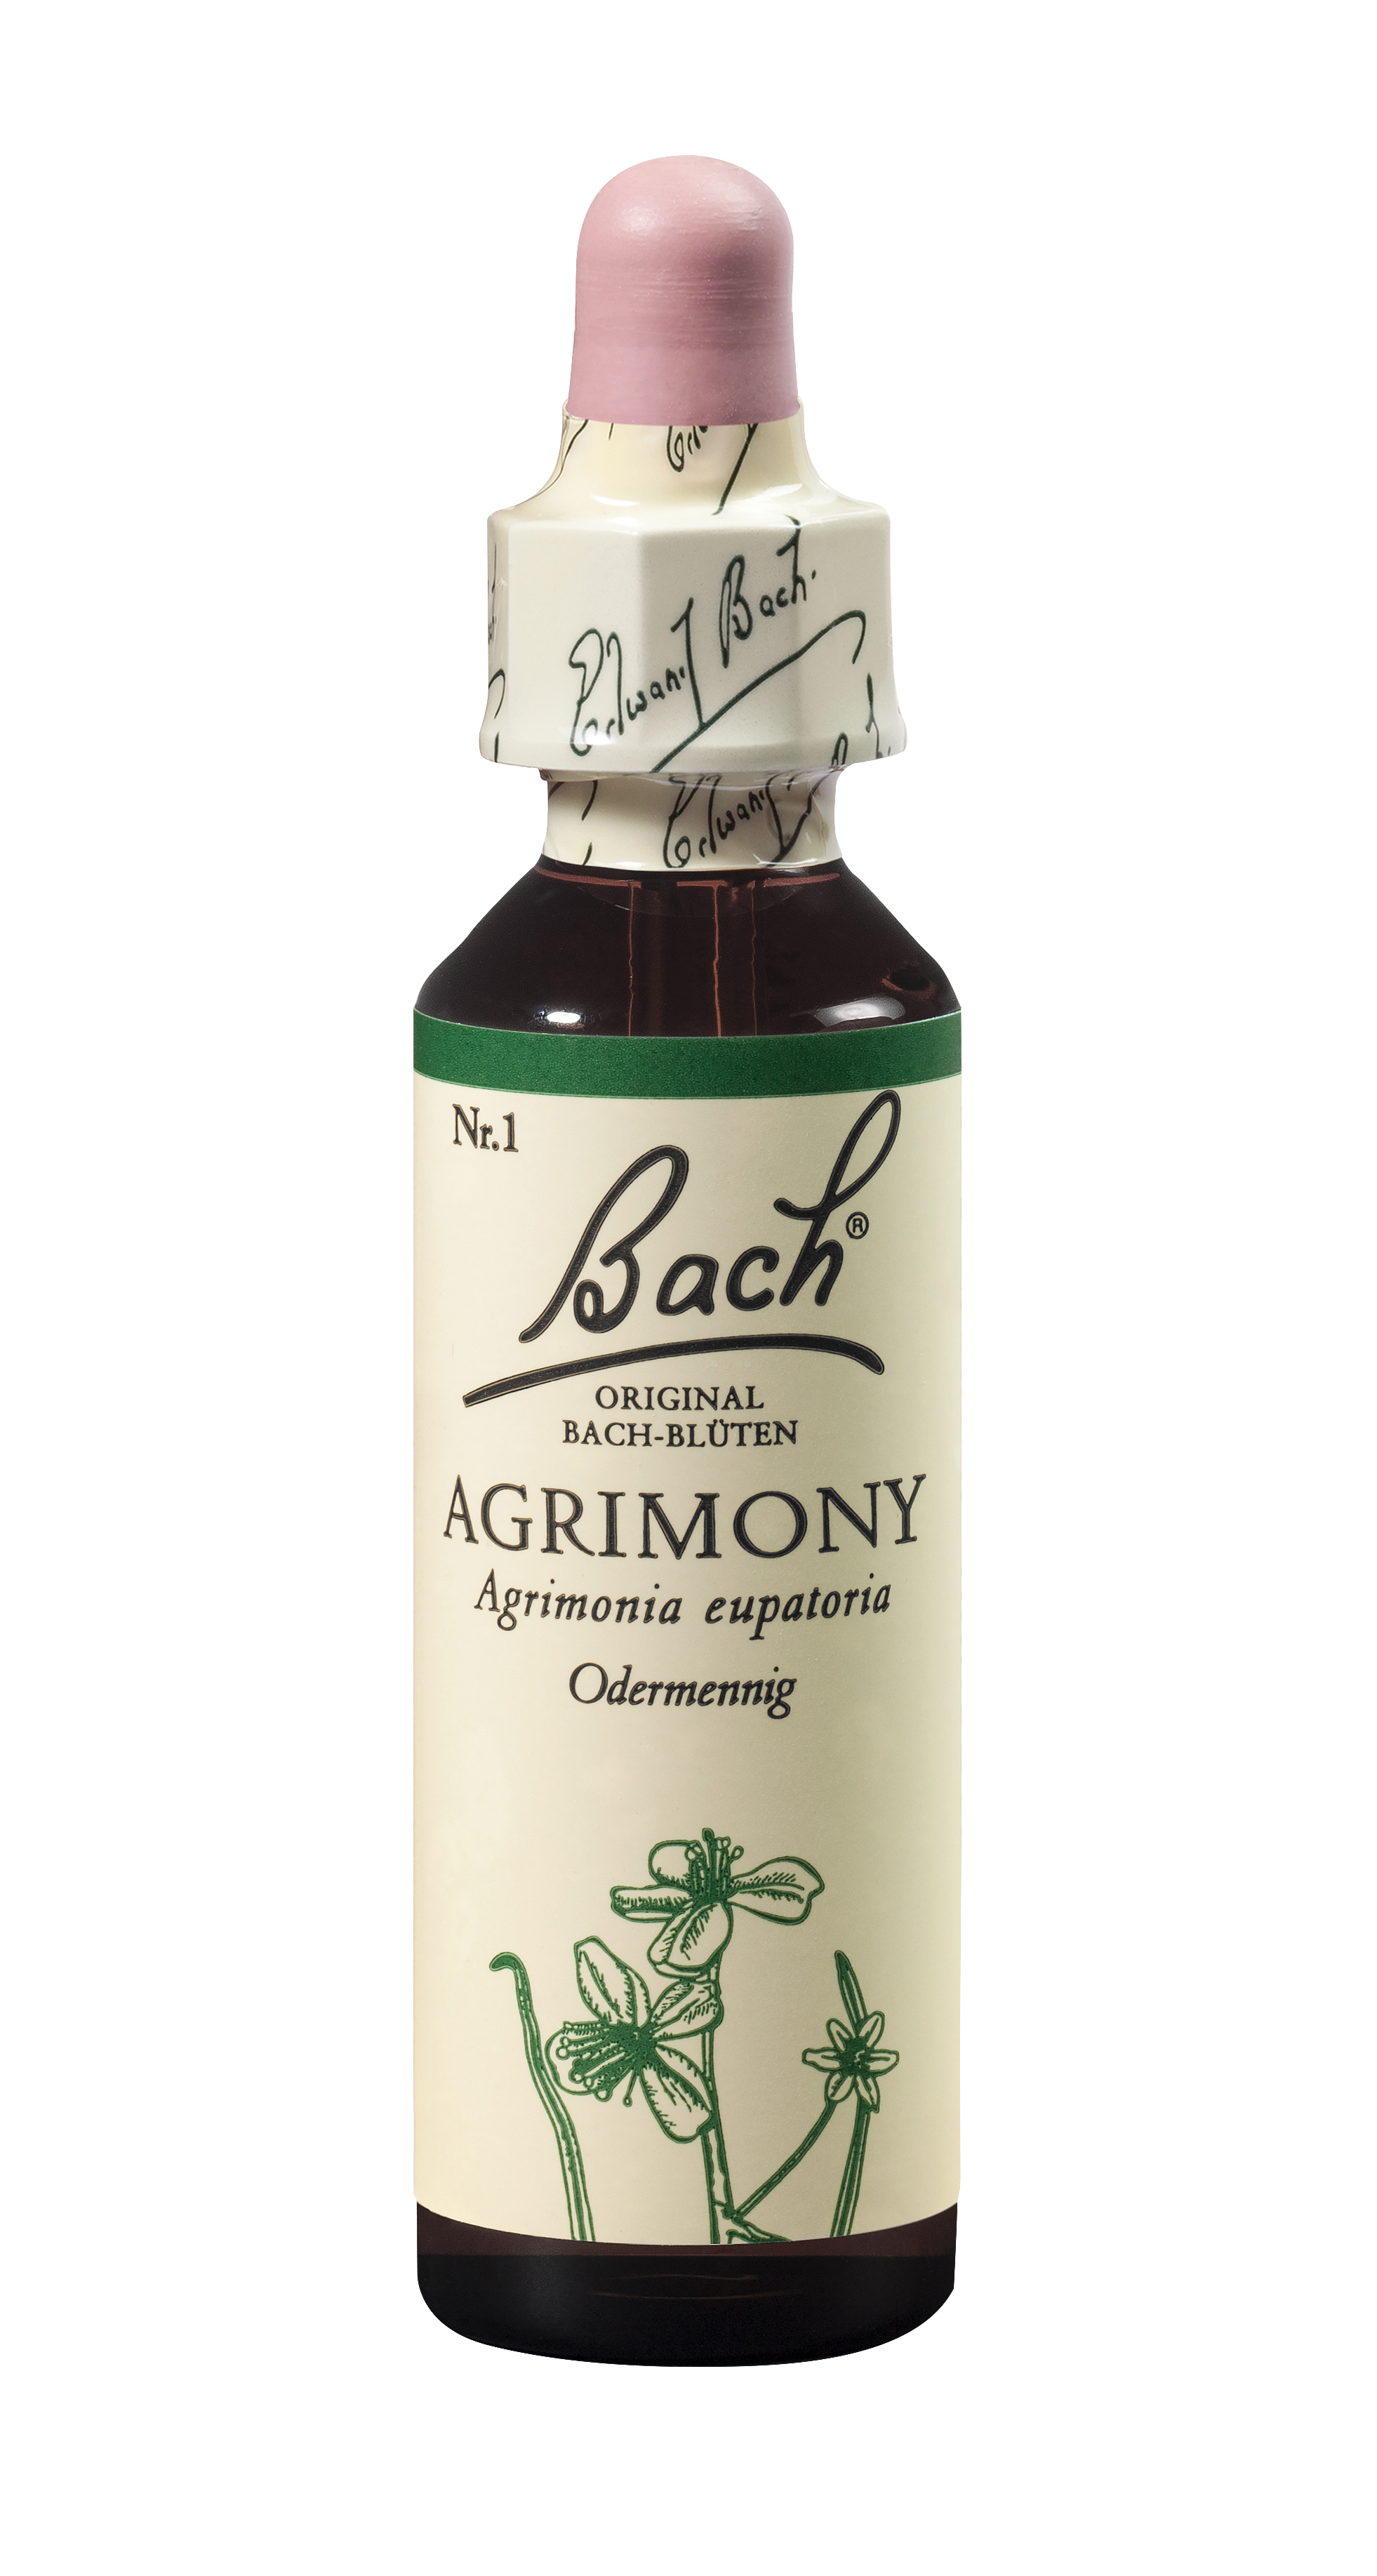 Bach®-Blüte Nr. 1 Agrimony (Odermenning)